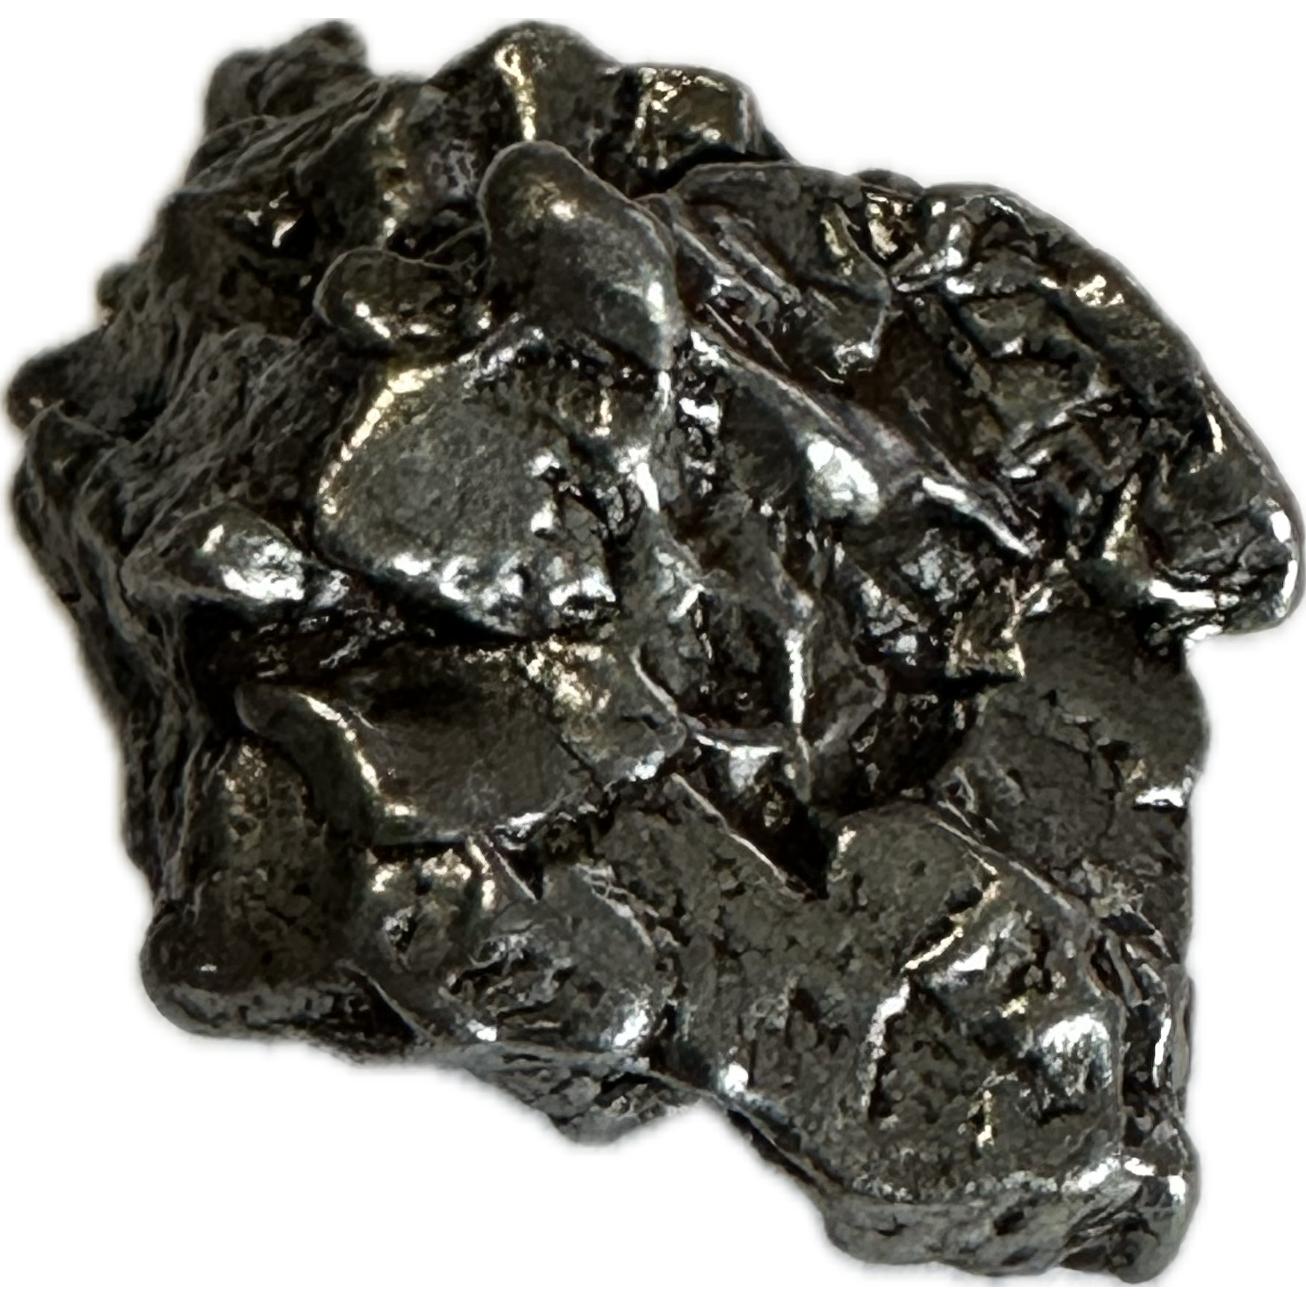 Campo del cielo meteorite from argentina